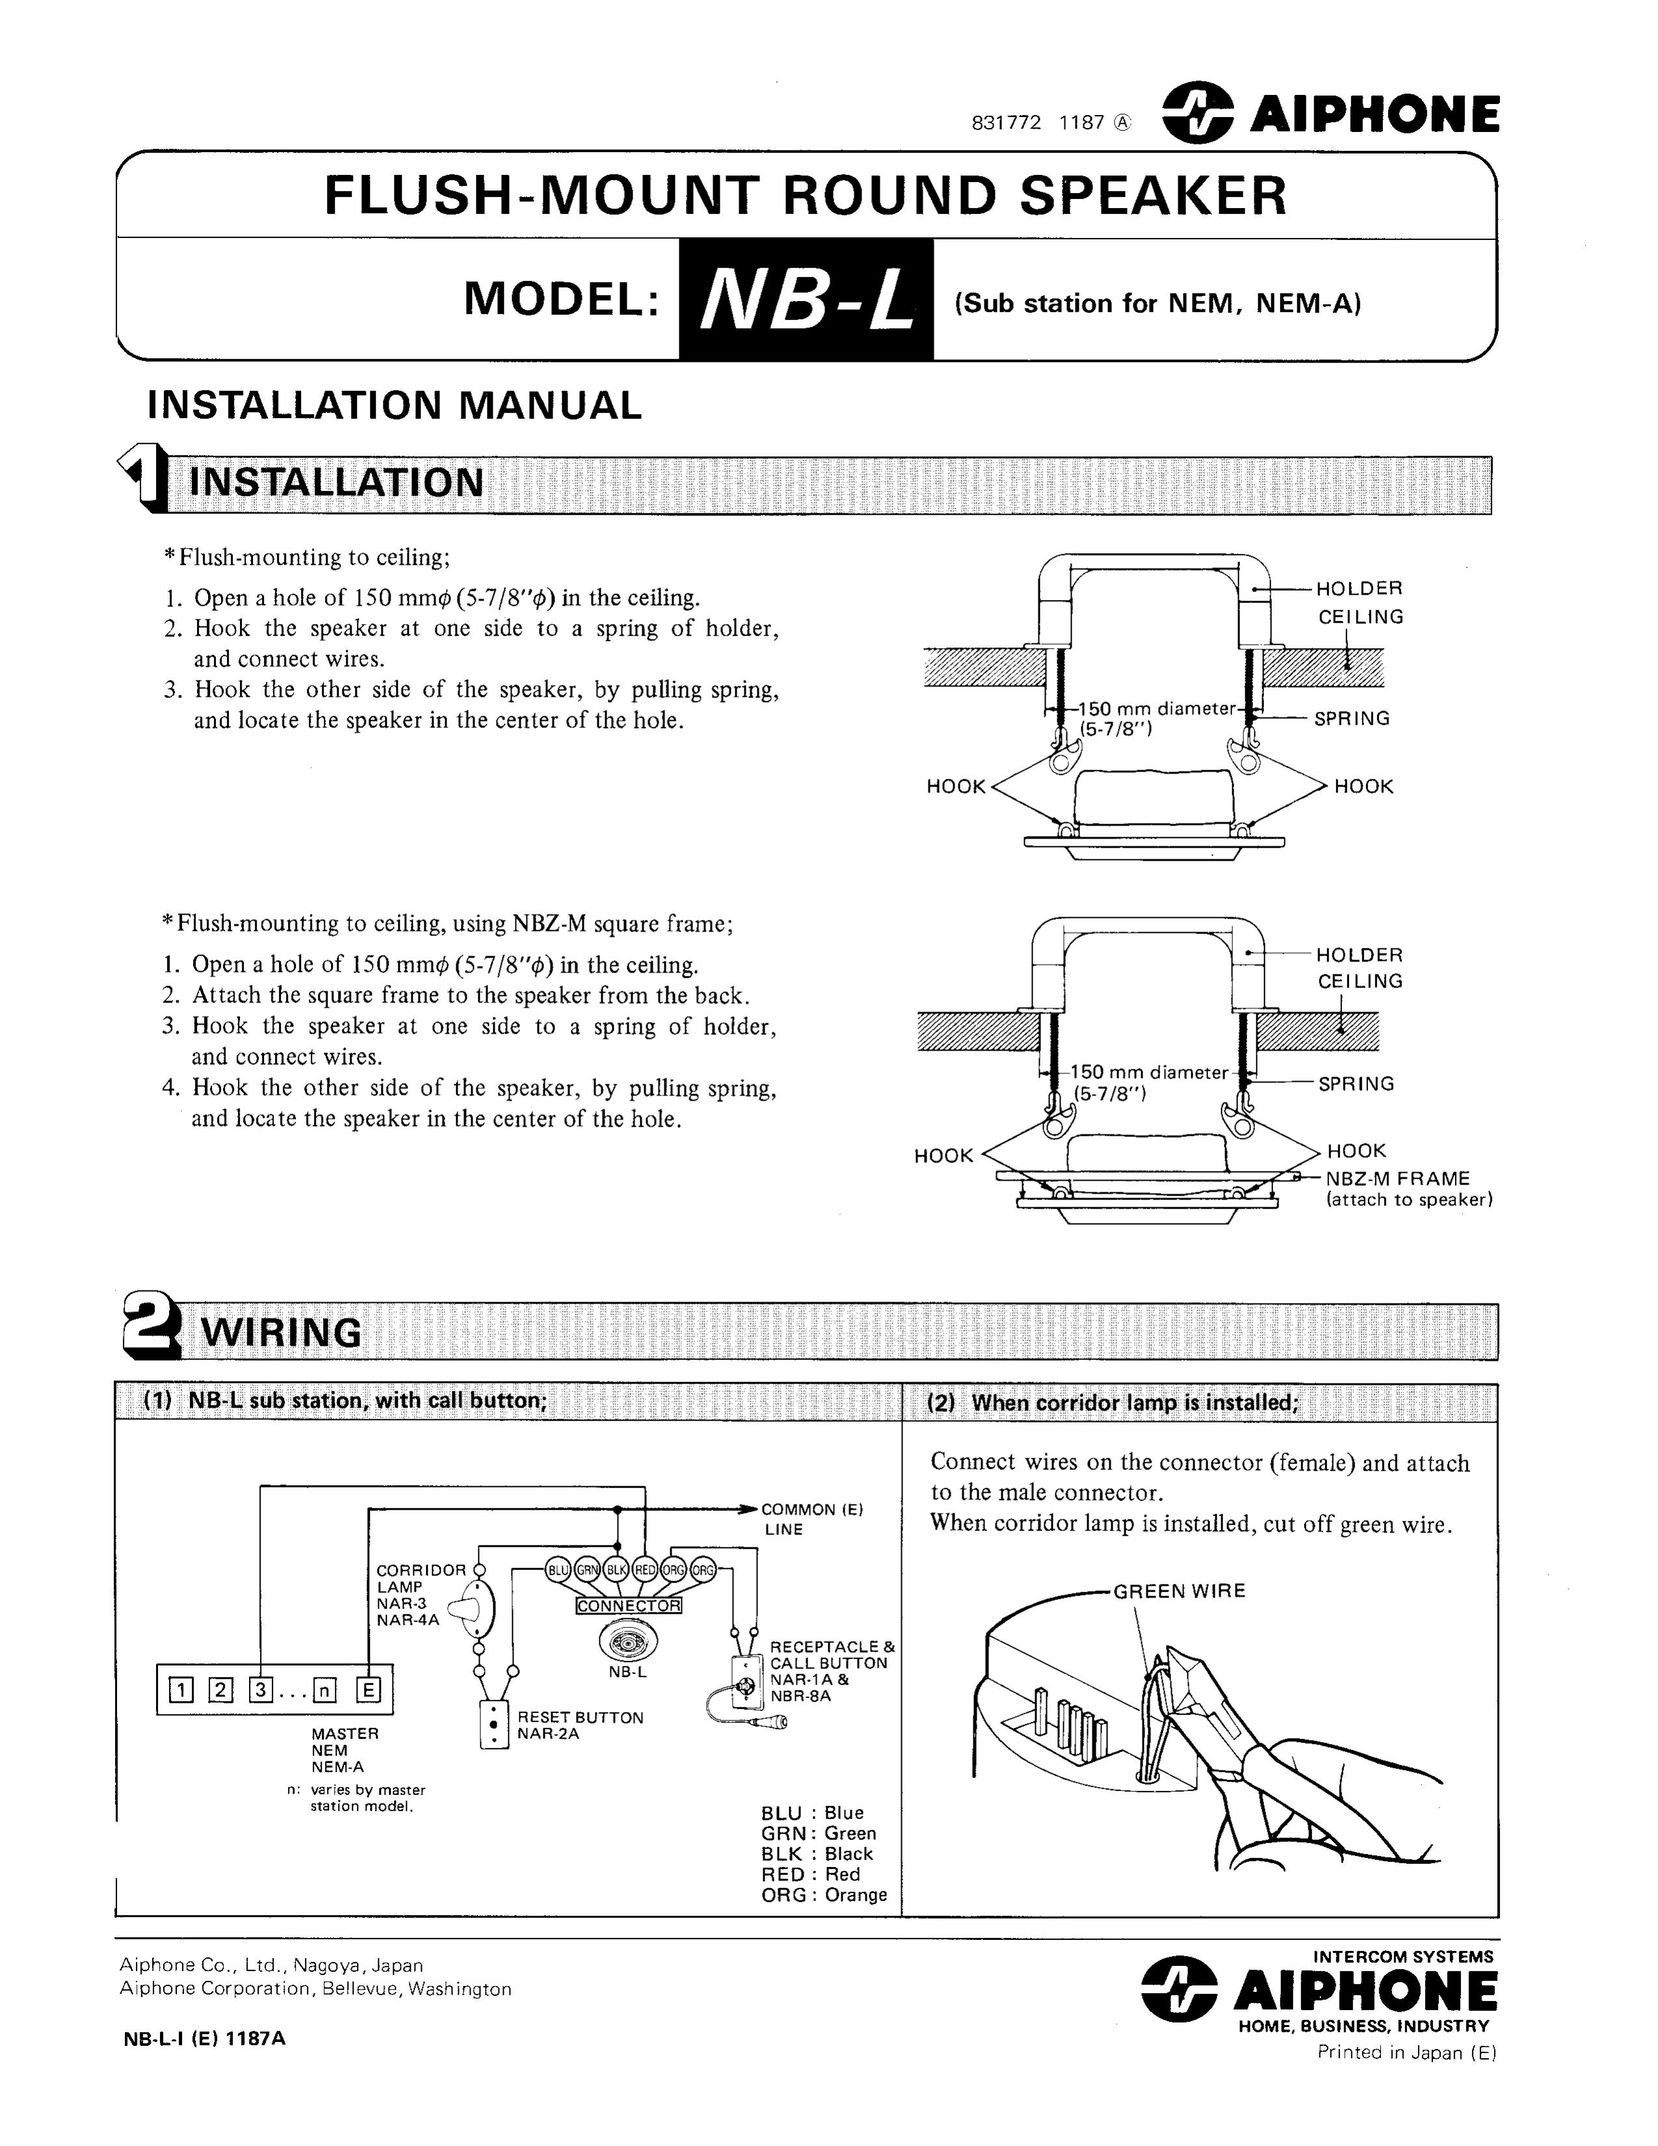 Aiphone NB-L Speaker User Manual